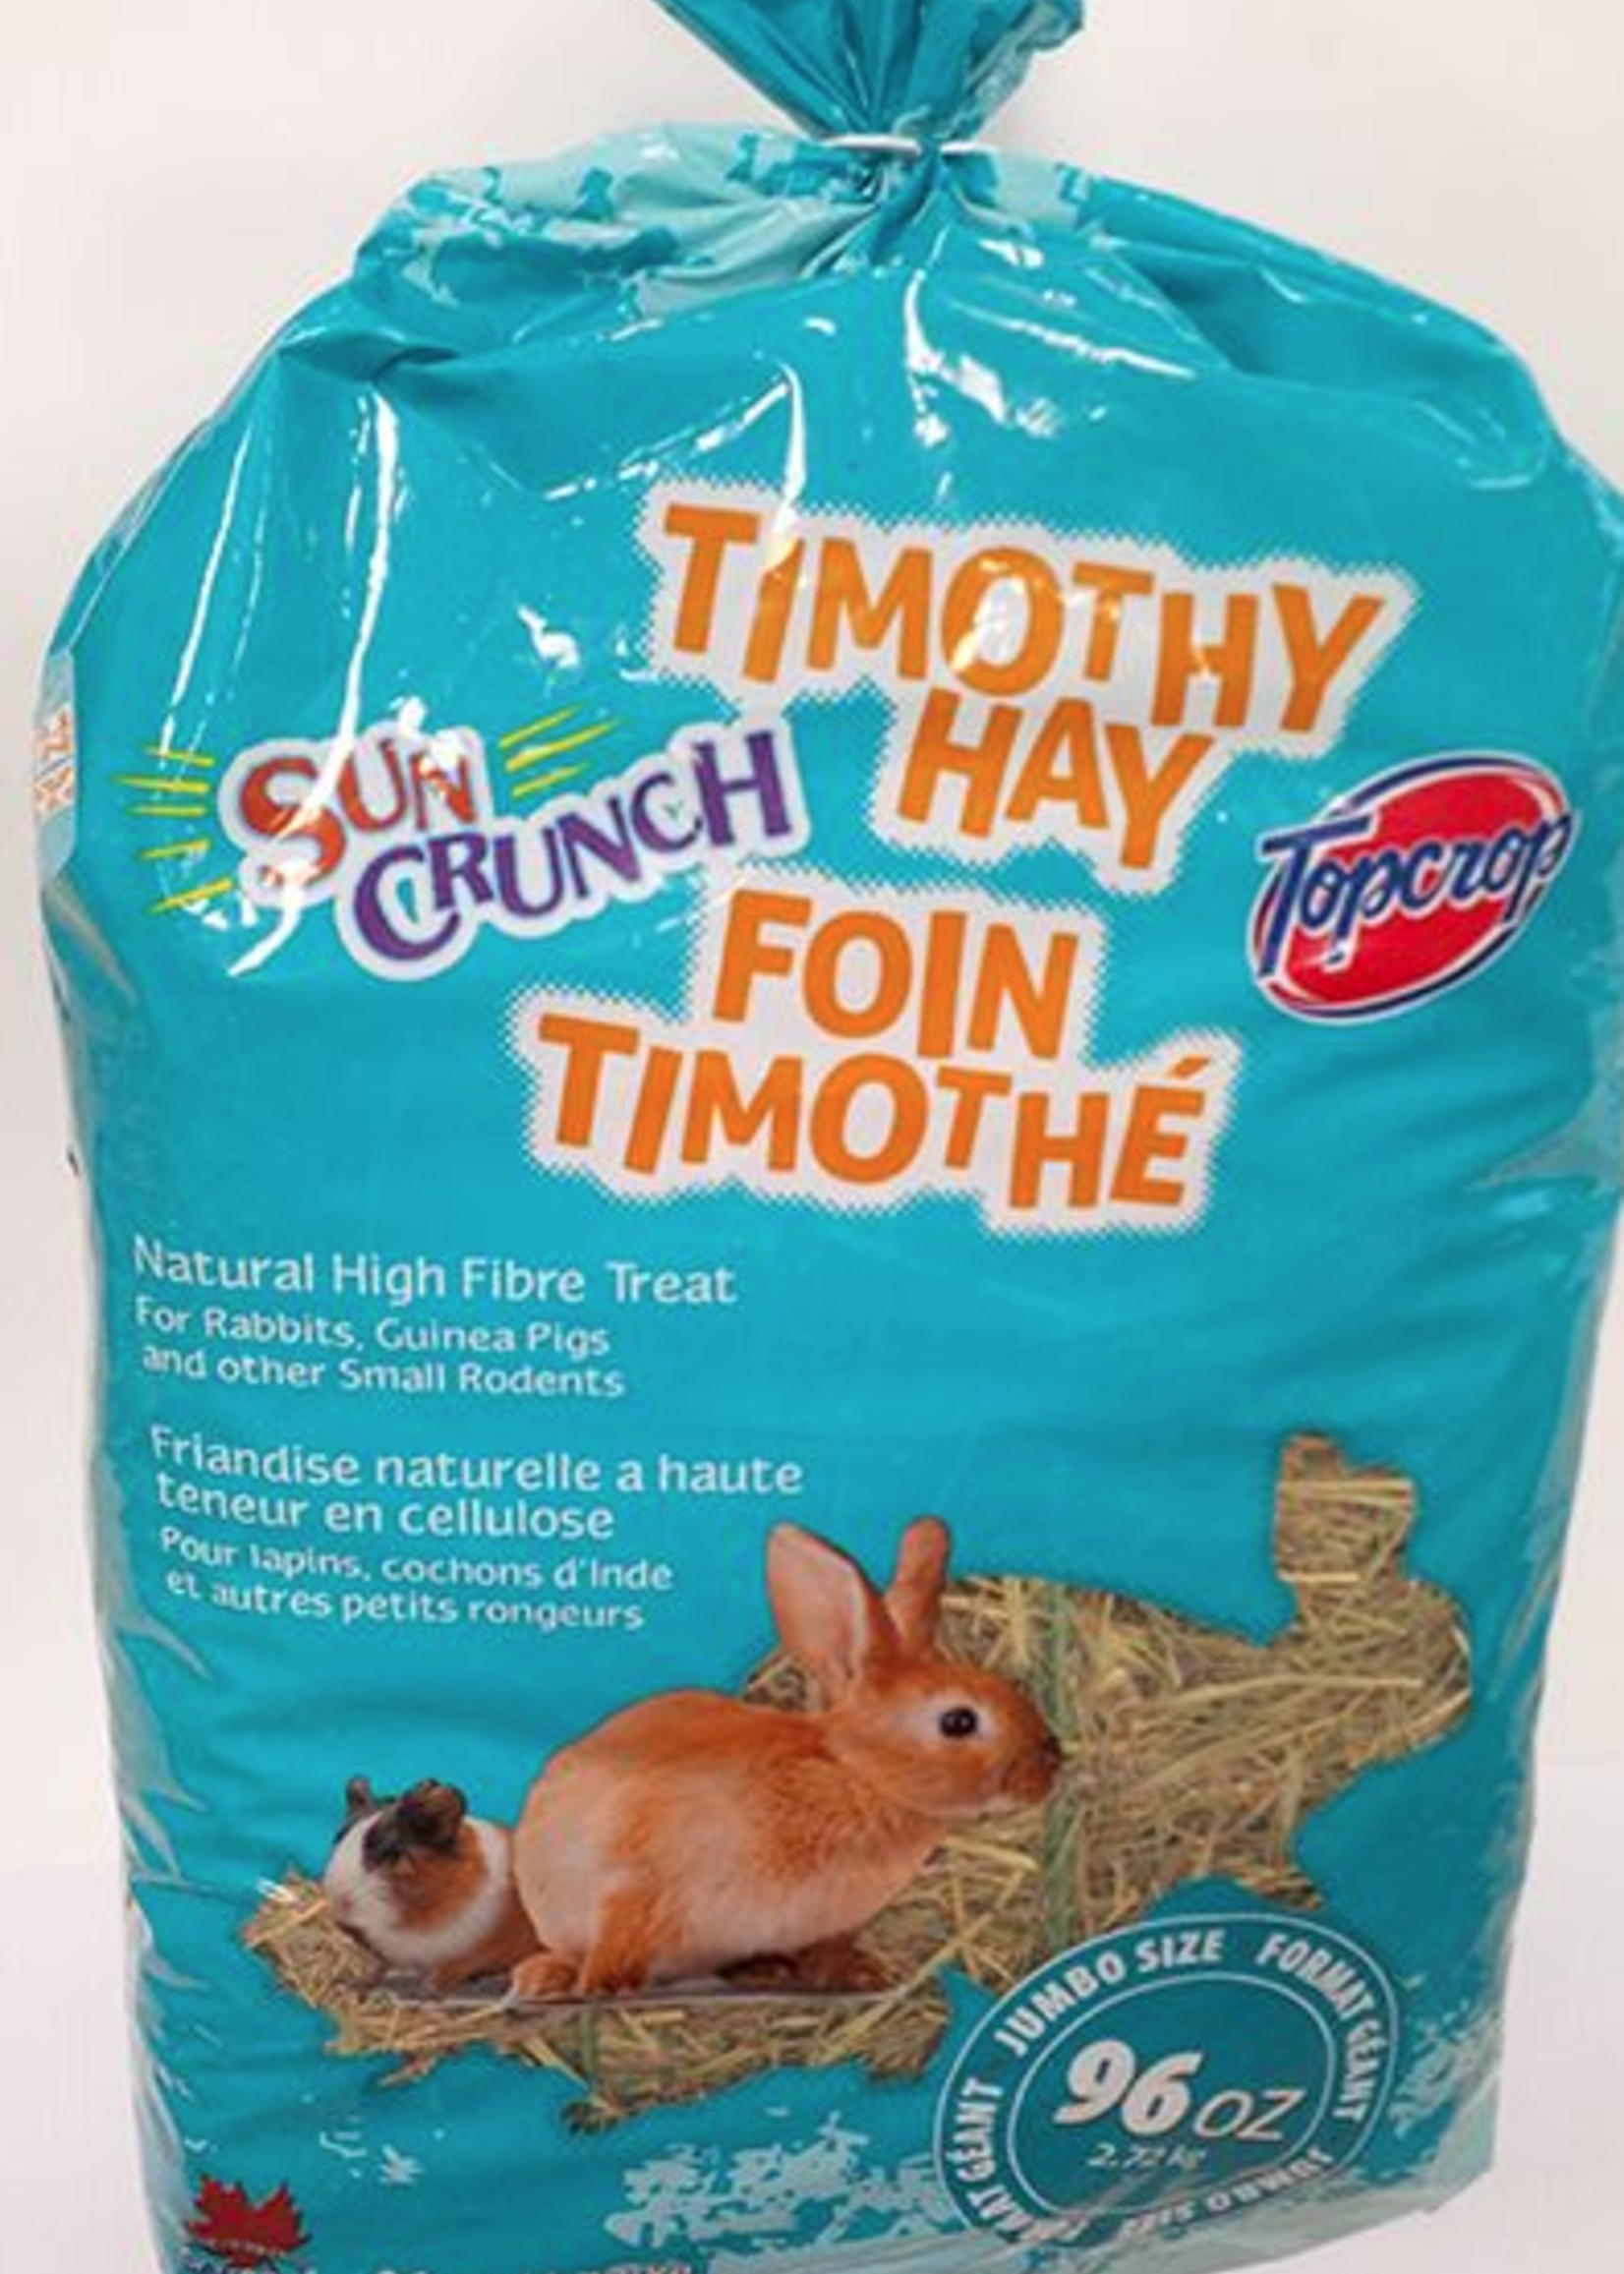 Top Crop SunCrunch Timothy Hay 96oz